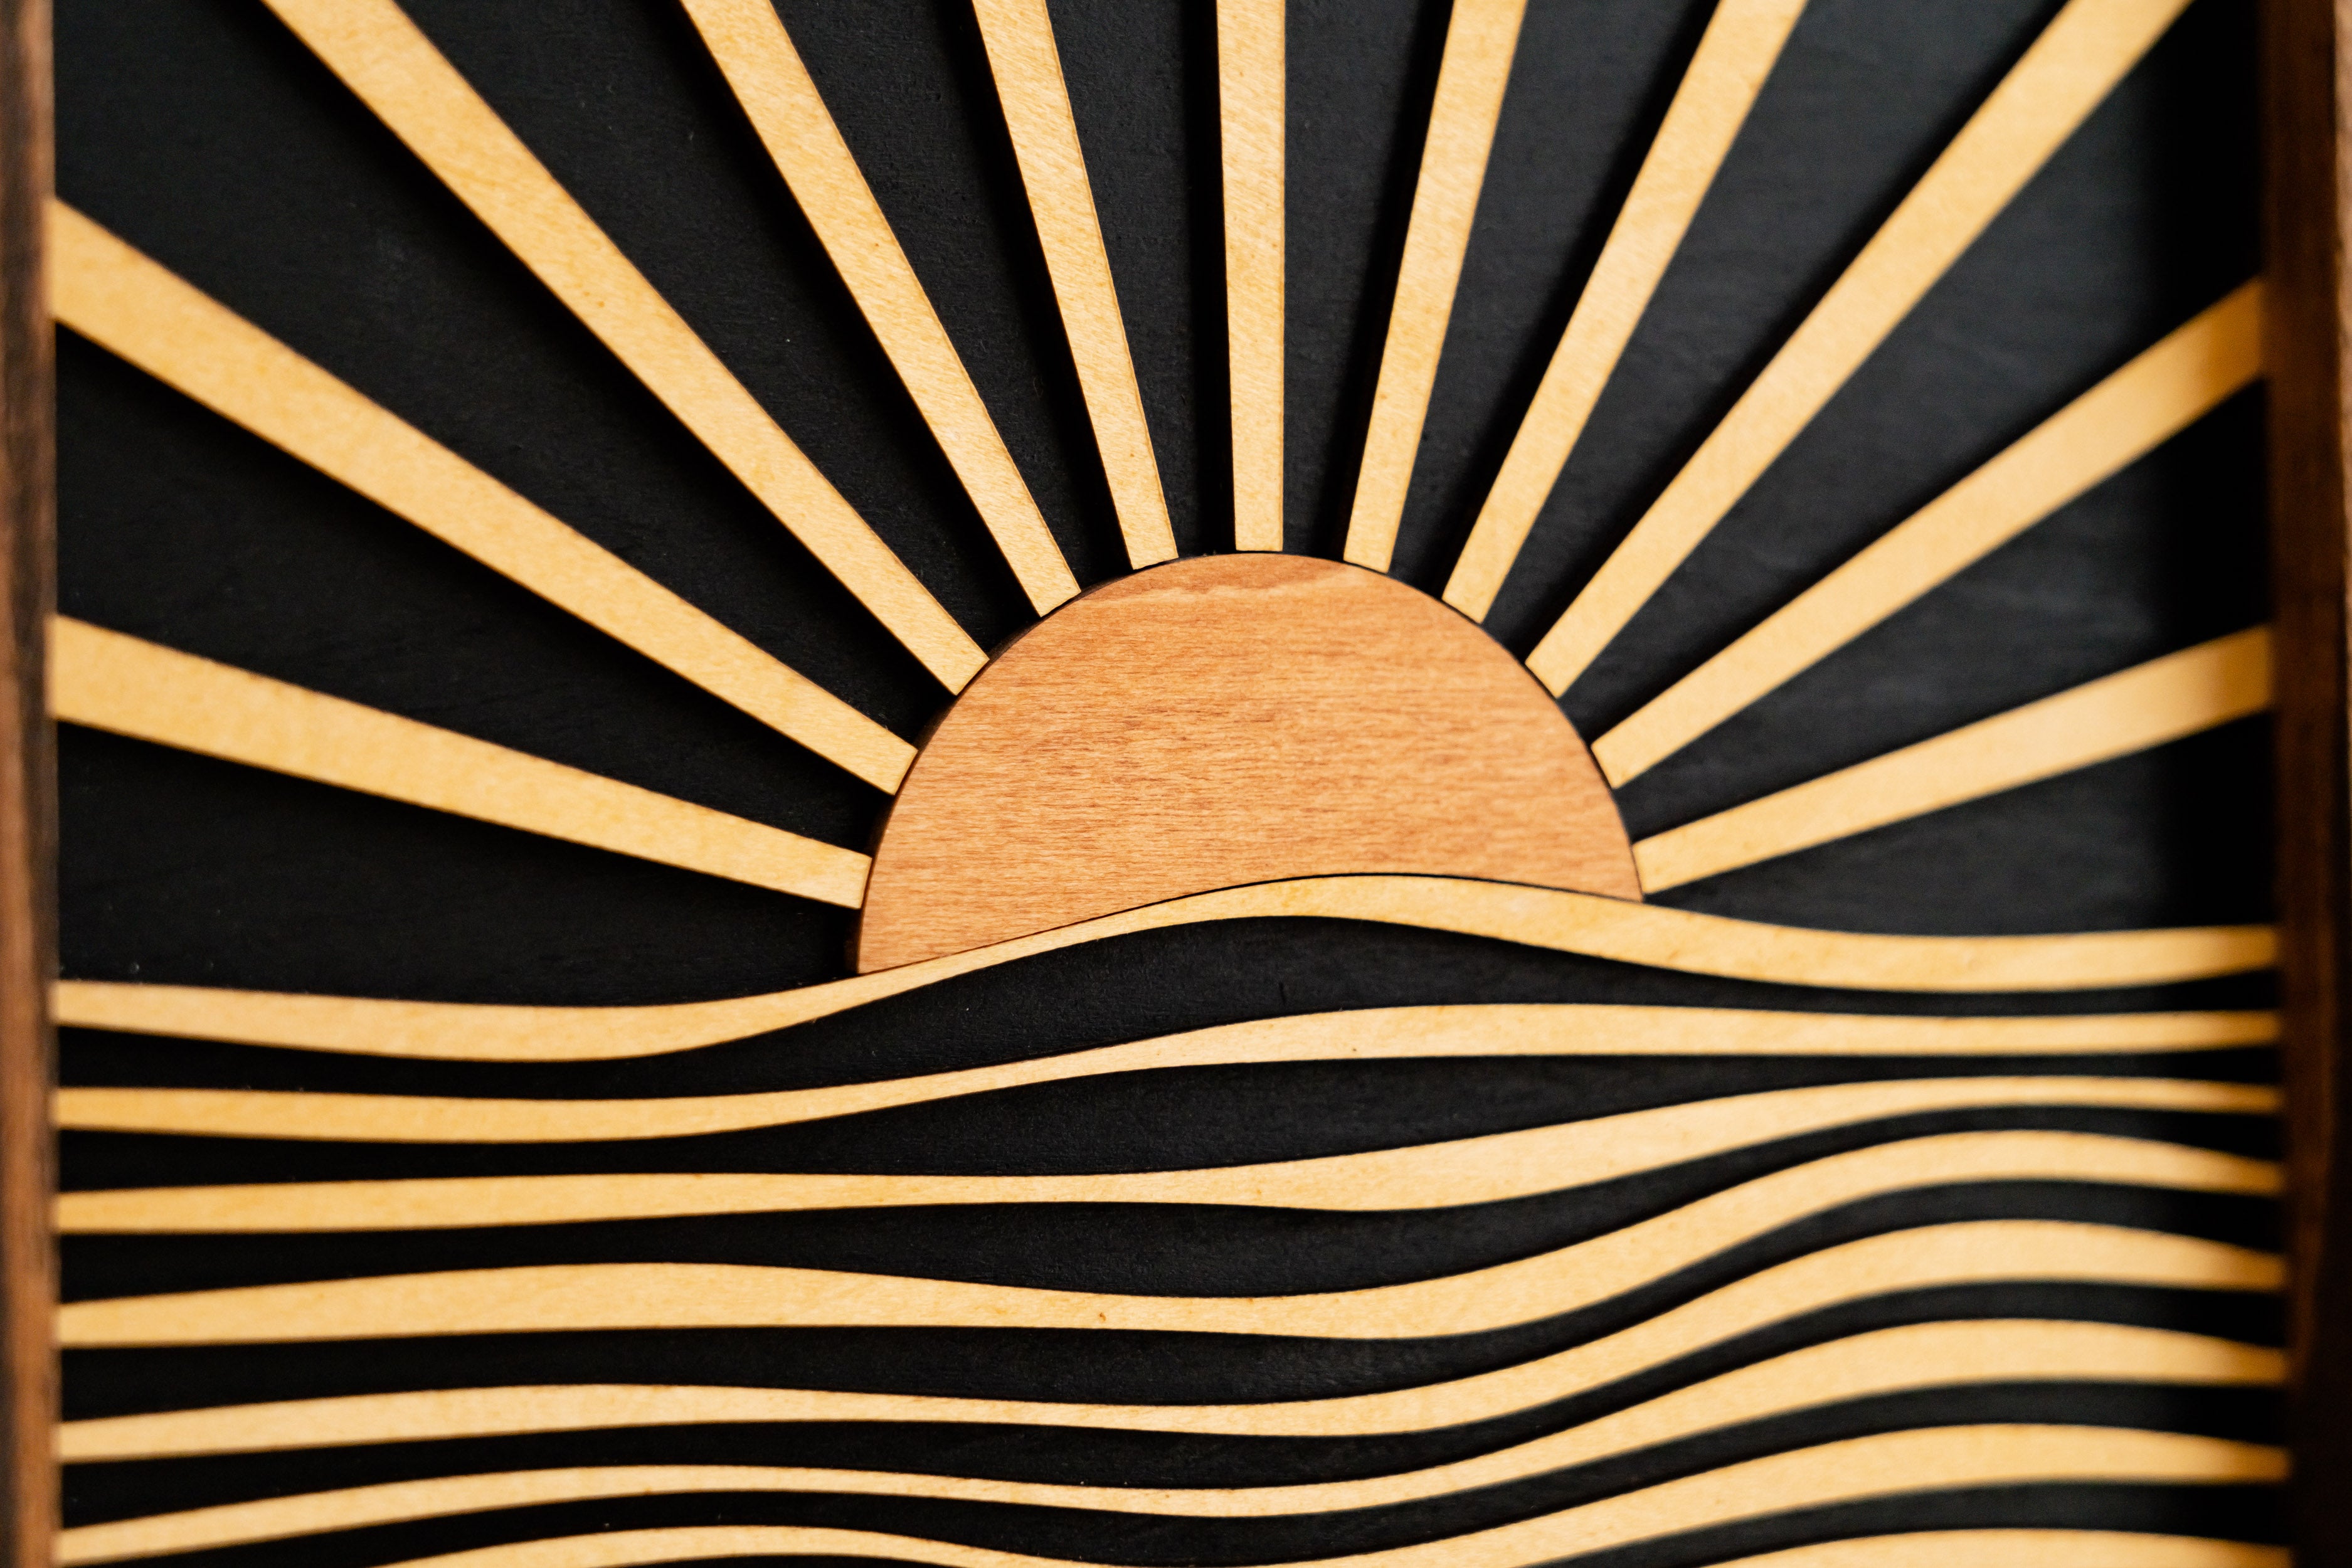 Boho Extra Large Sun Wood Art for Living Room Decor